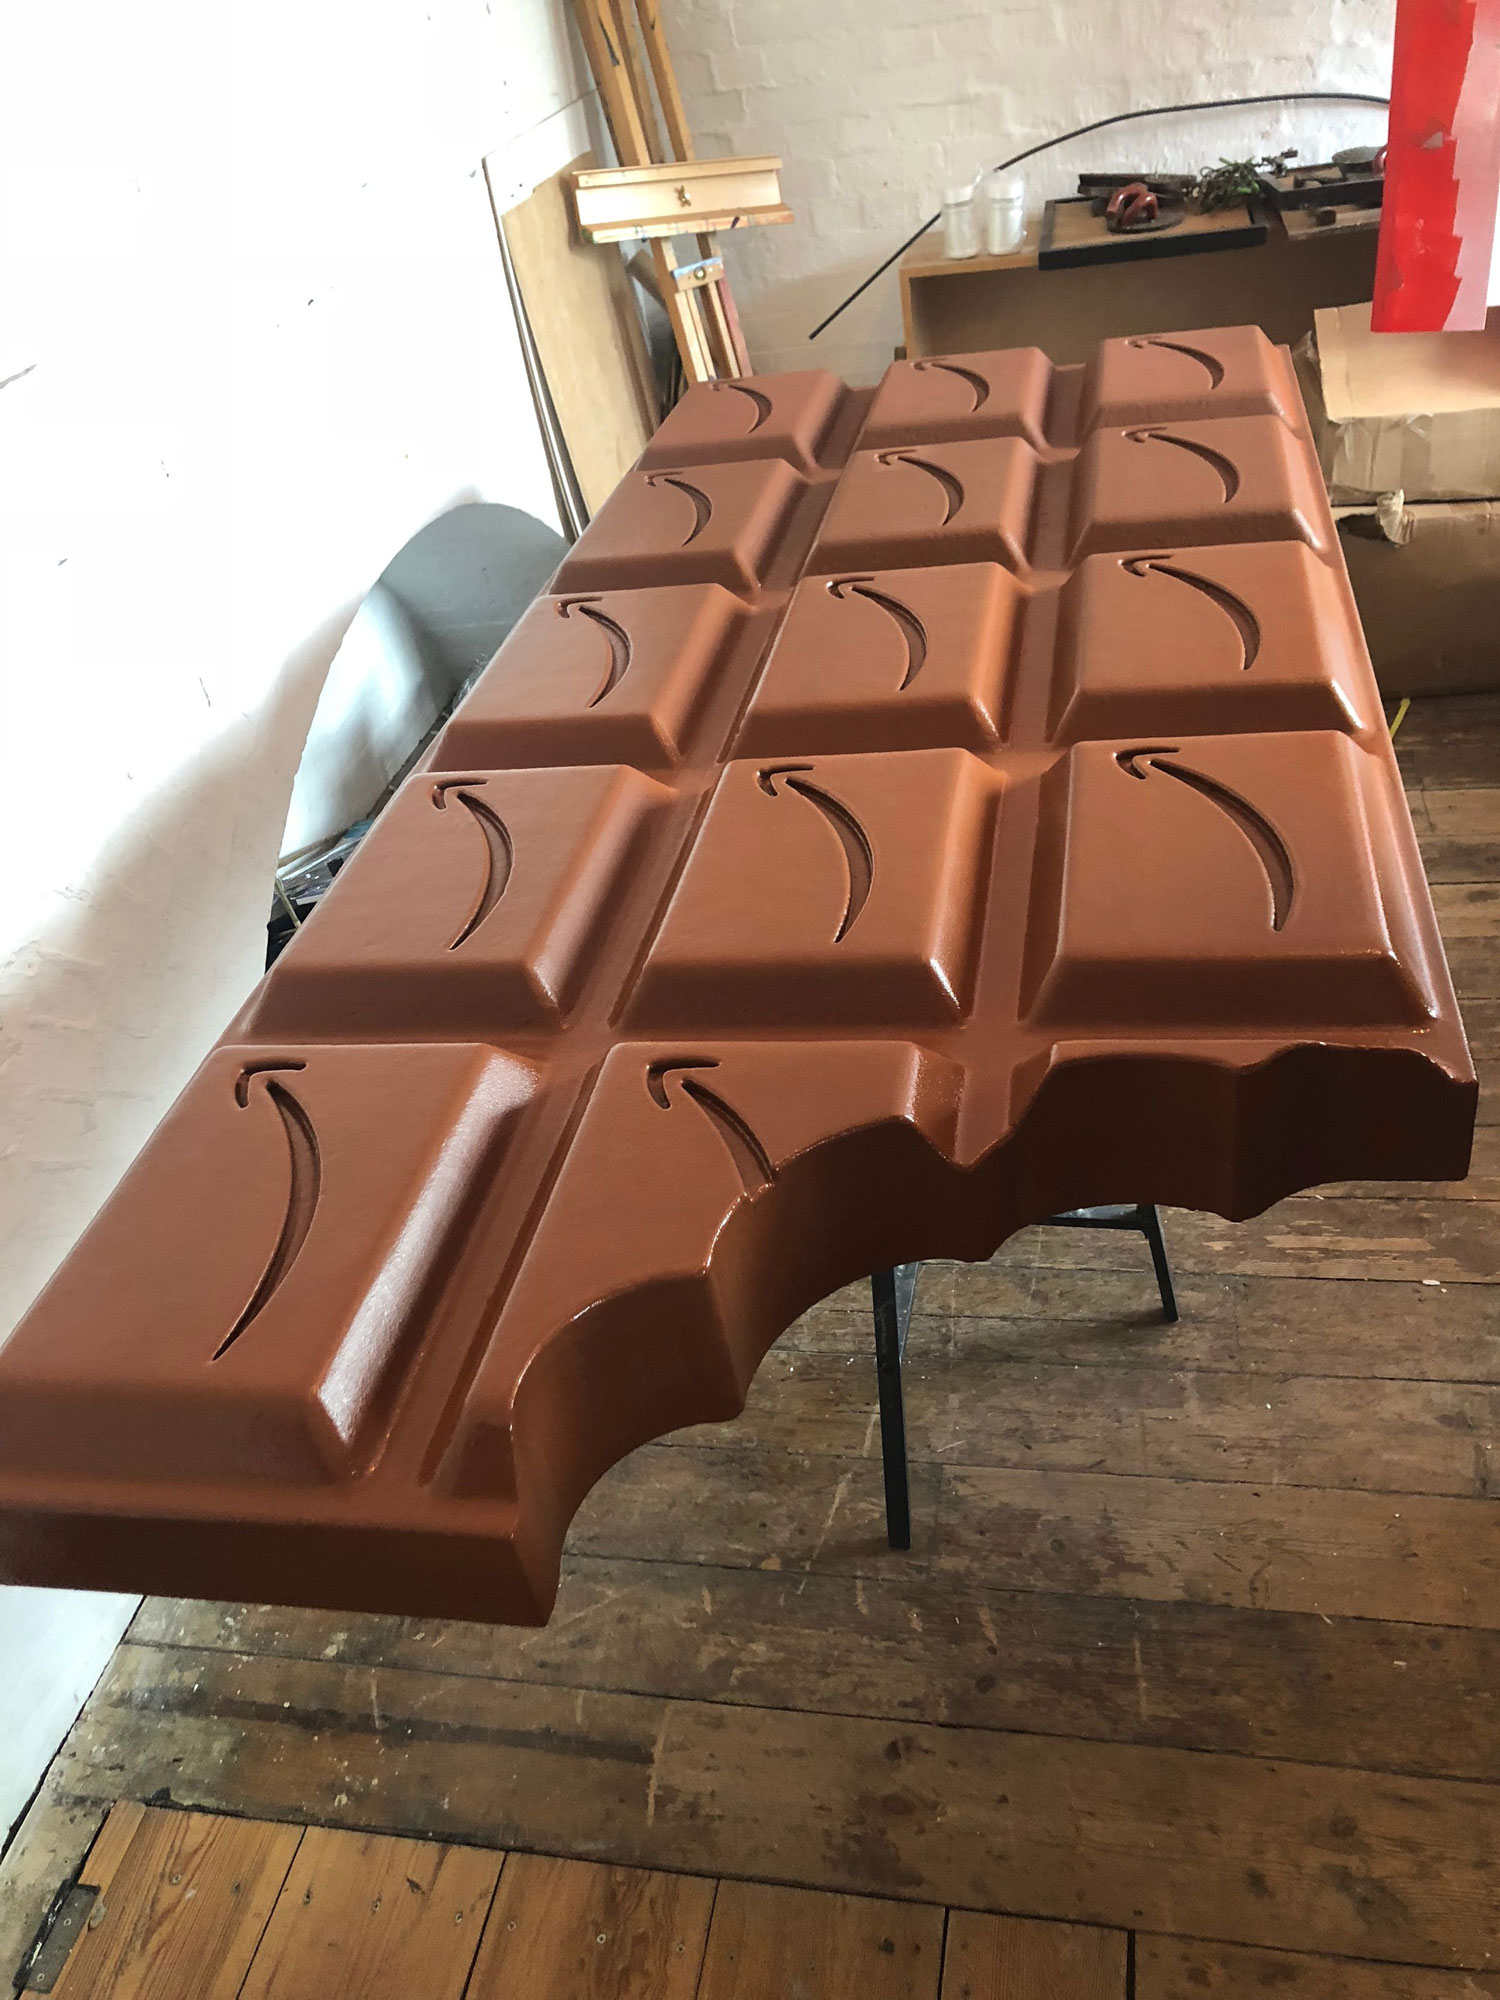 giant fabricated chocolate bar